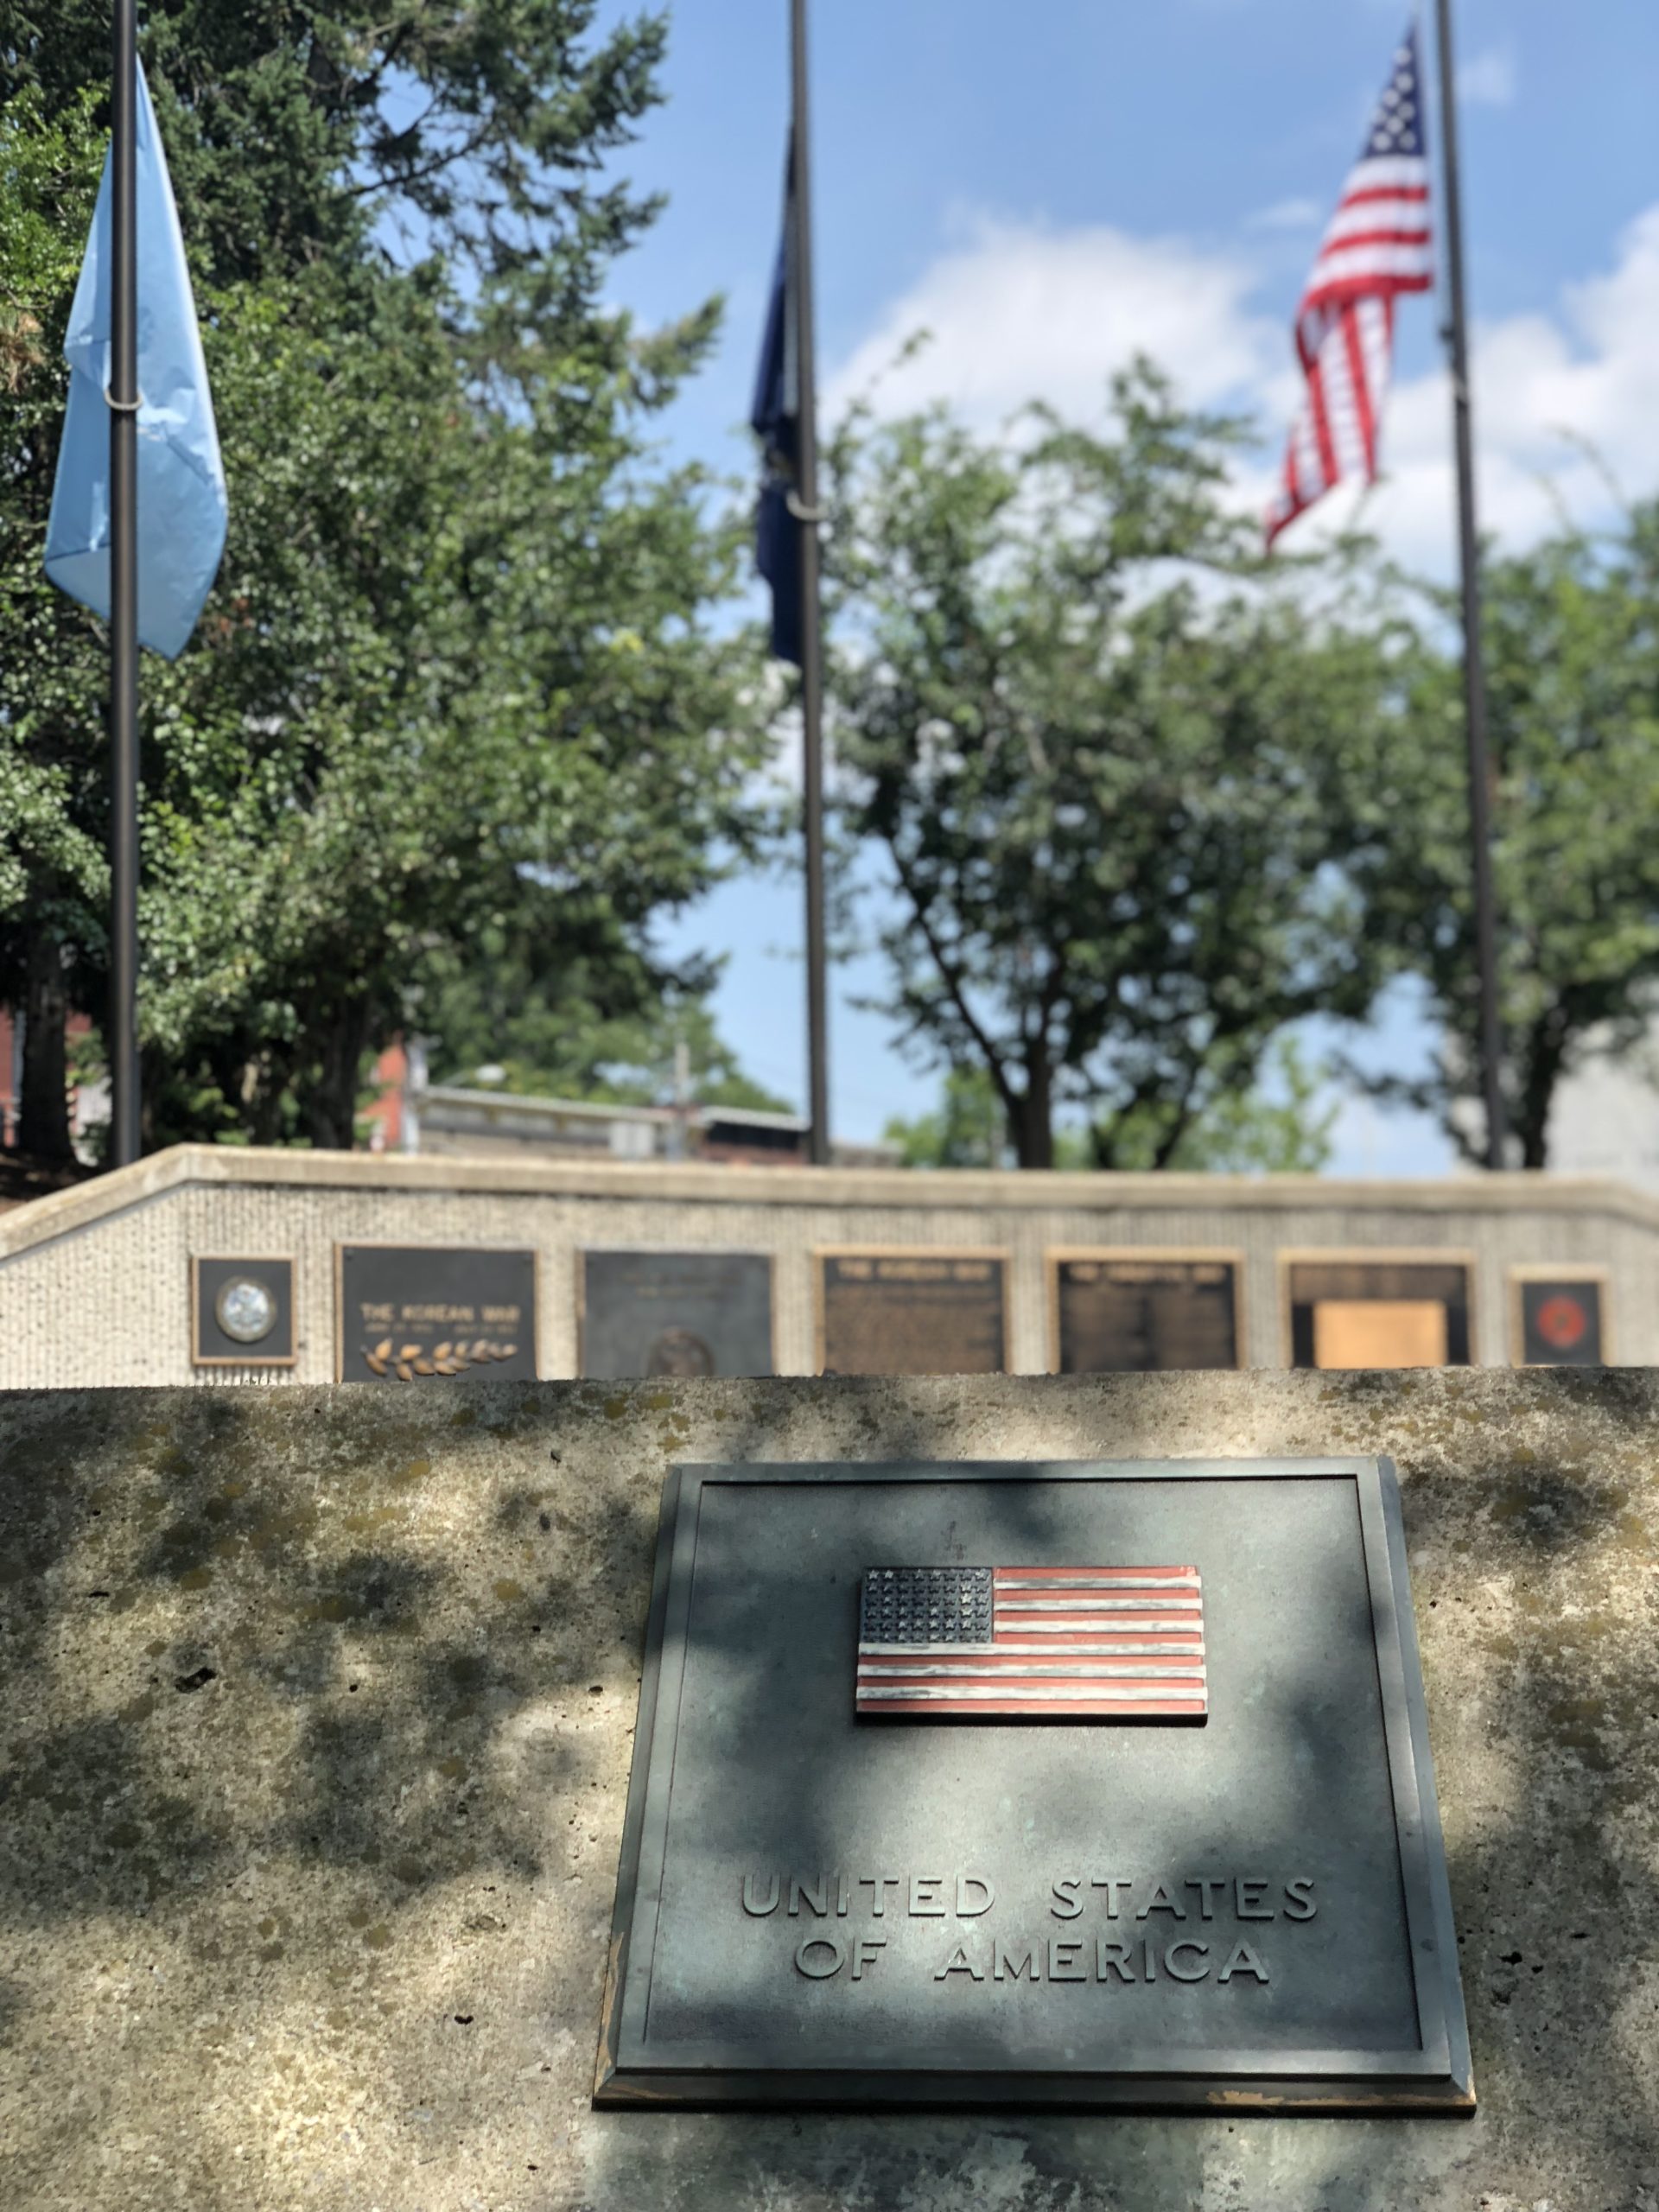 Korean War Memorials - Albany